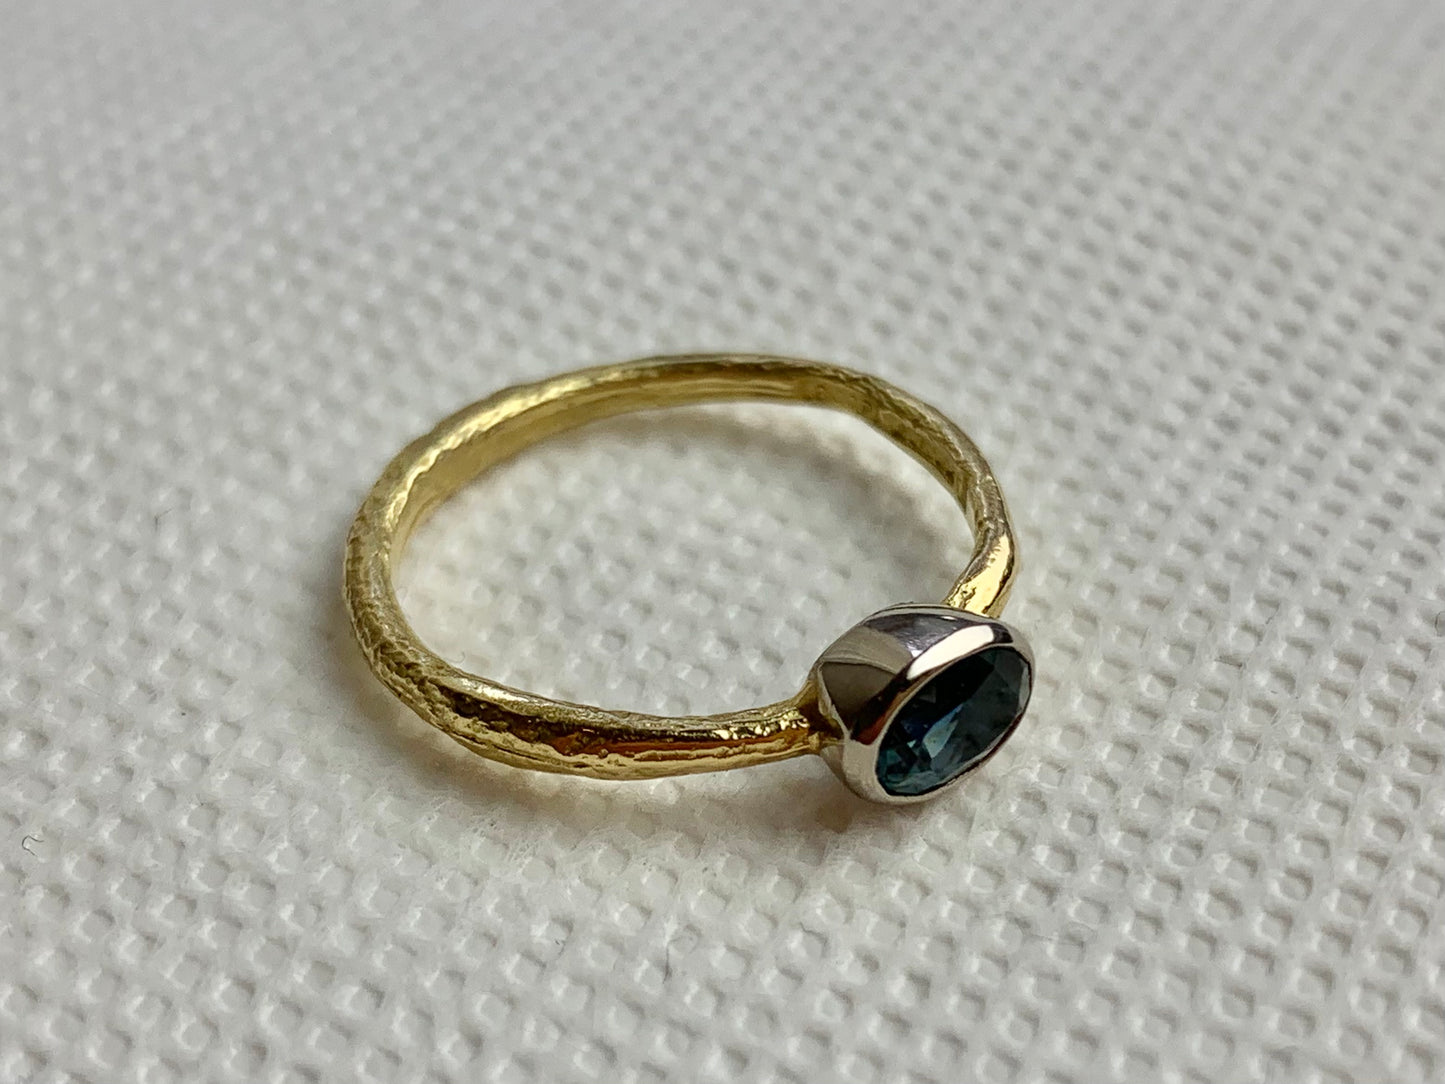 Palmer, Sarah - Teal Sapphire Gold Ring